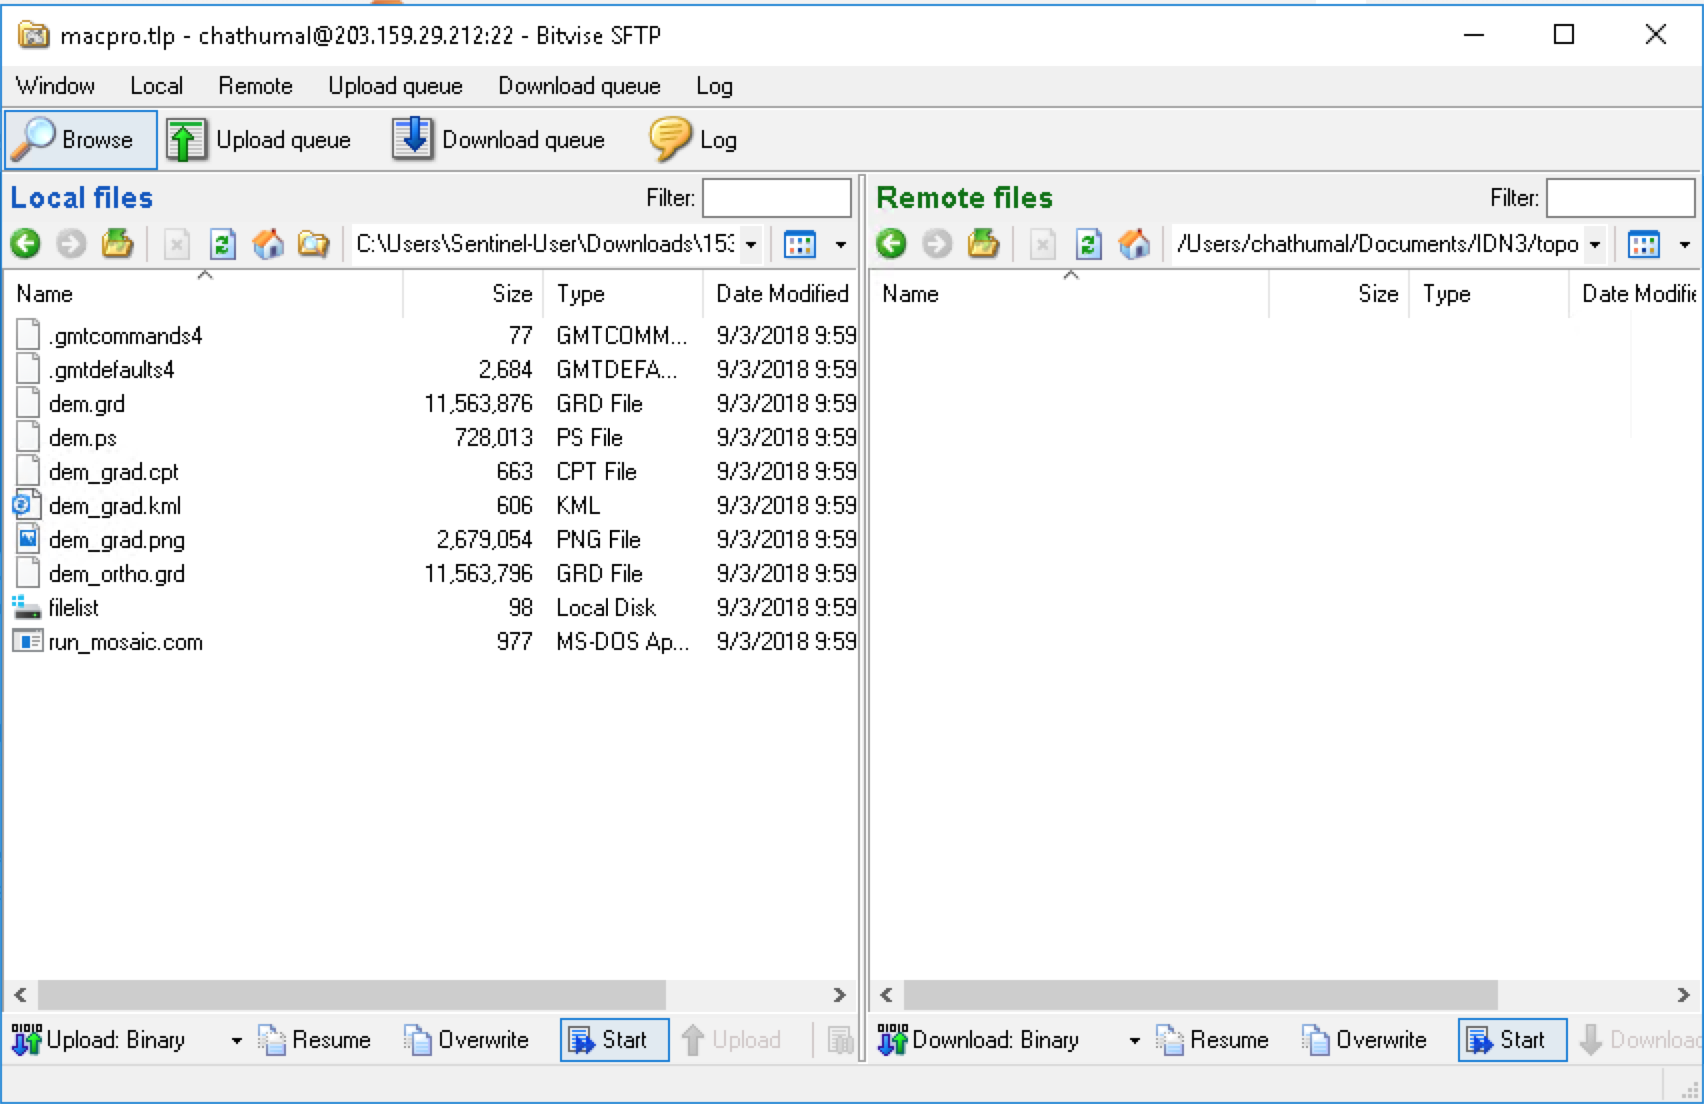 Uploading DEM files to topo folder